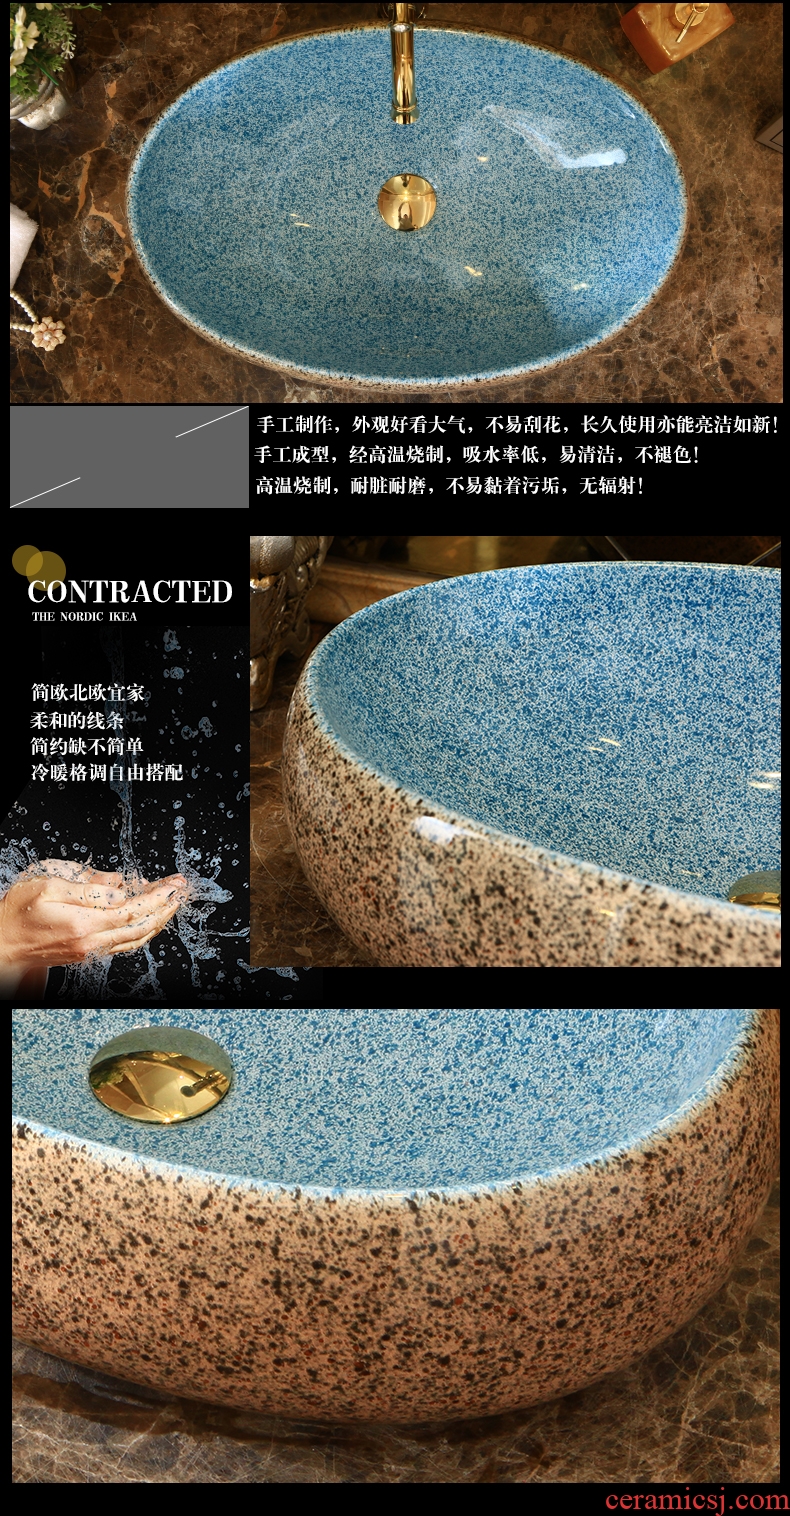 Ling yu ceramic art basin on its dark blue oval sink the basin that wash a face European toilet